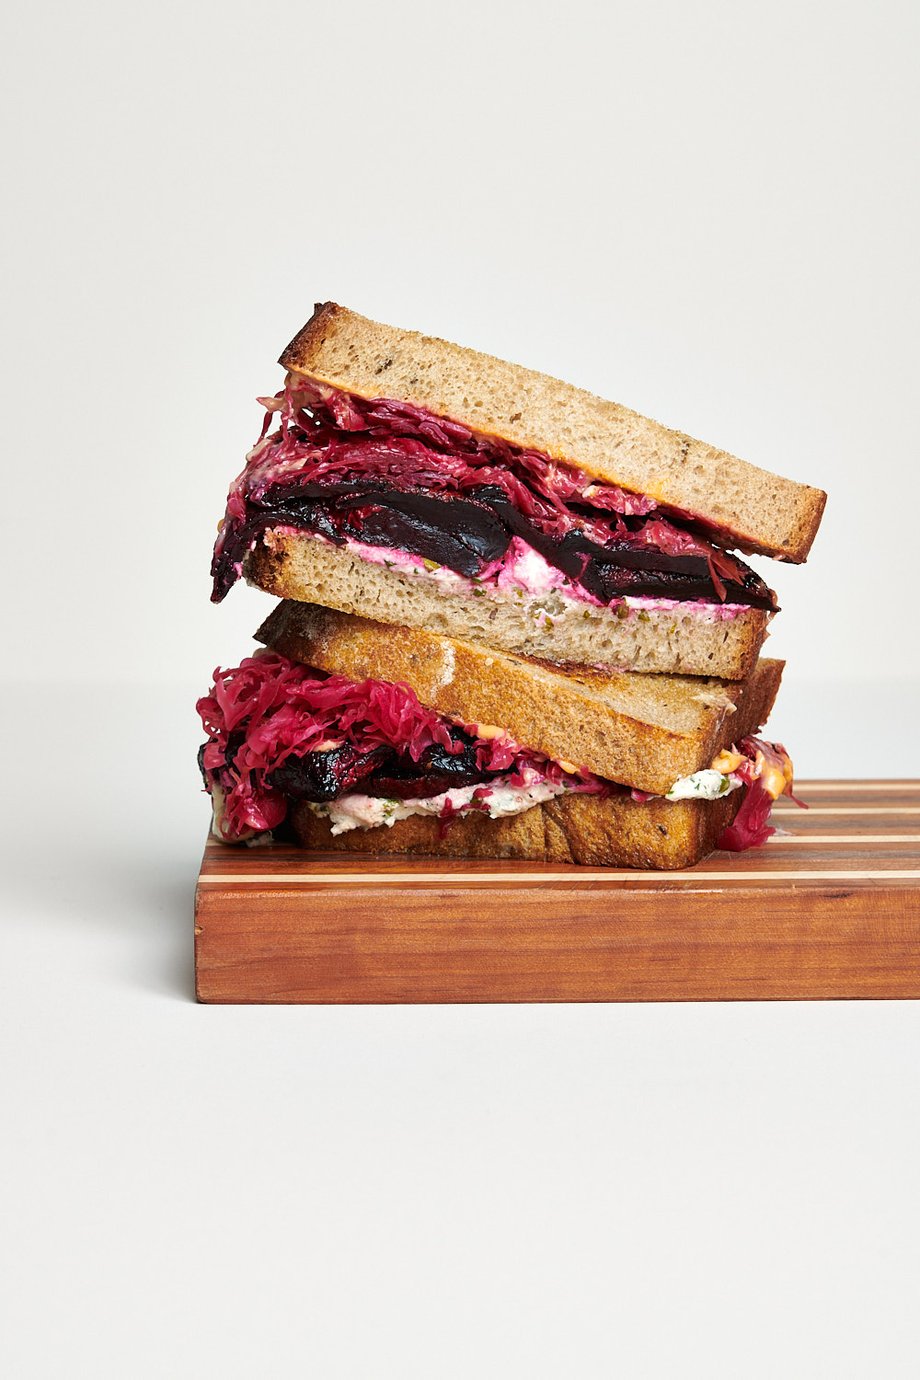 Dina Avila photographs a scrumptious beet sandwich on a white backdrop for Fermenter